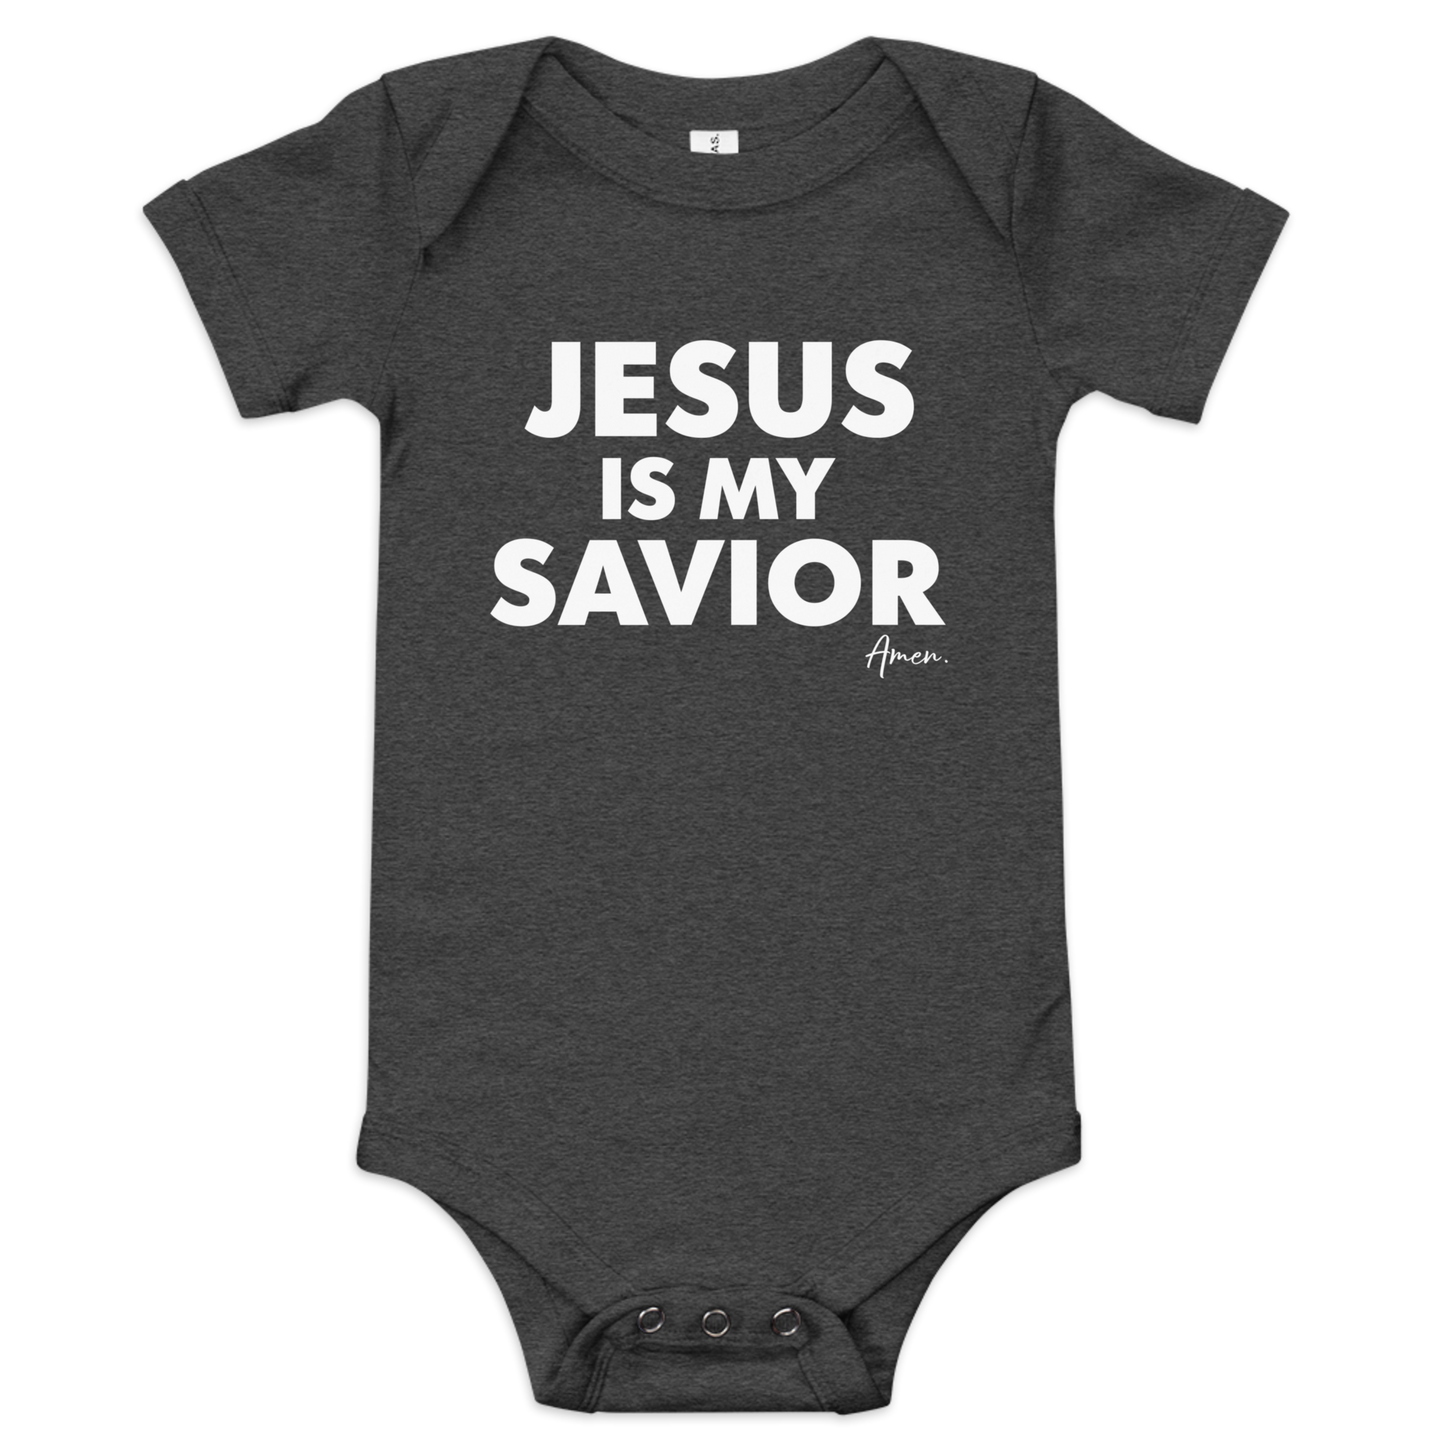 Jesus is my Savior - Baby Short Sleeve One Piece